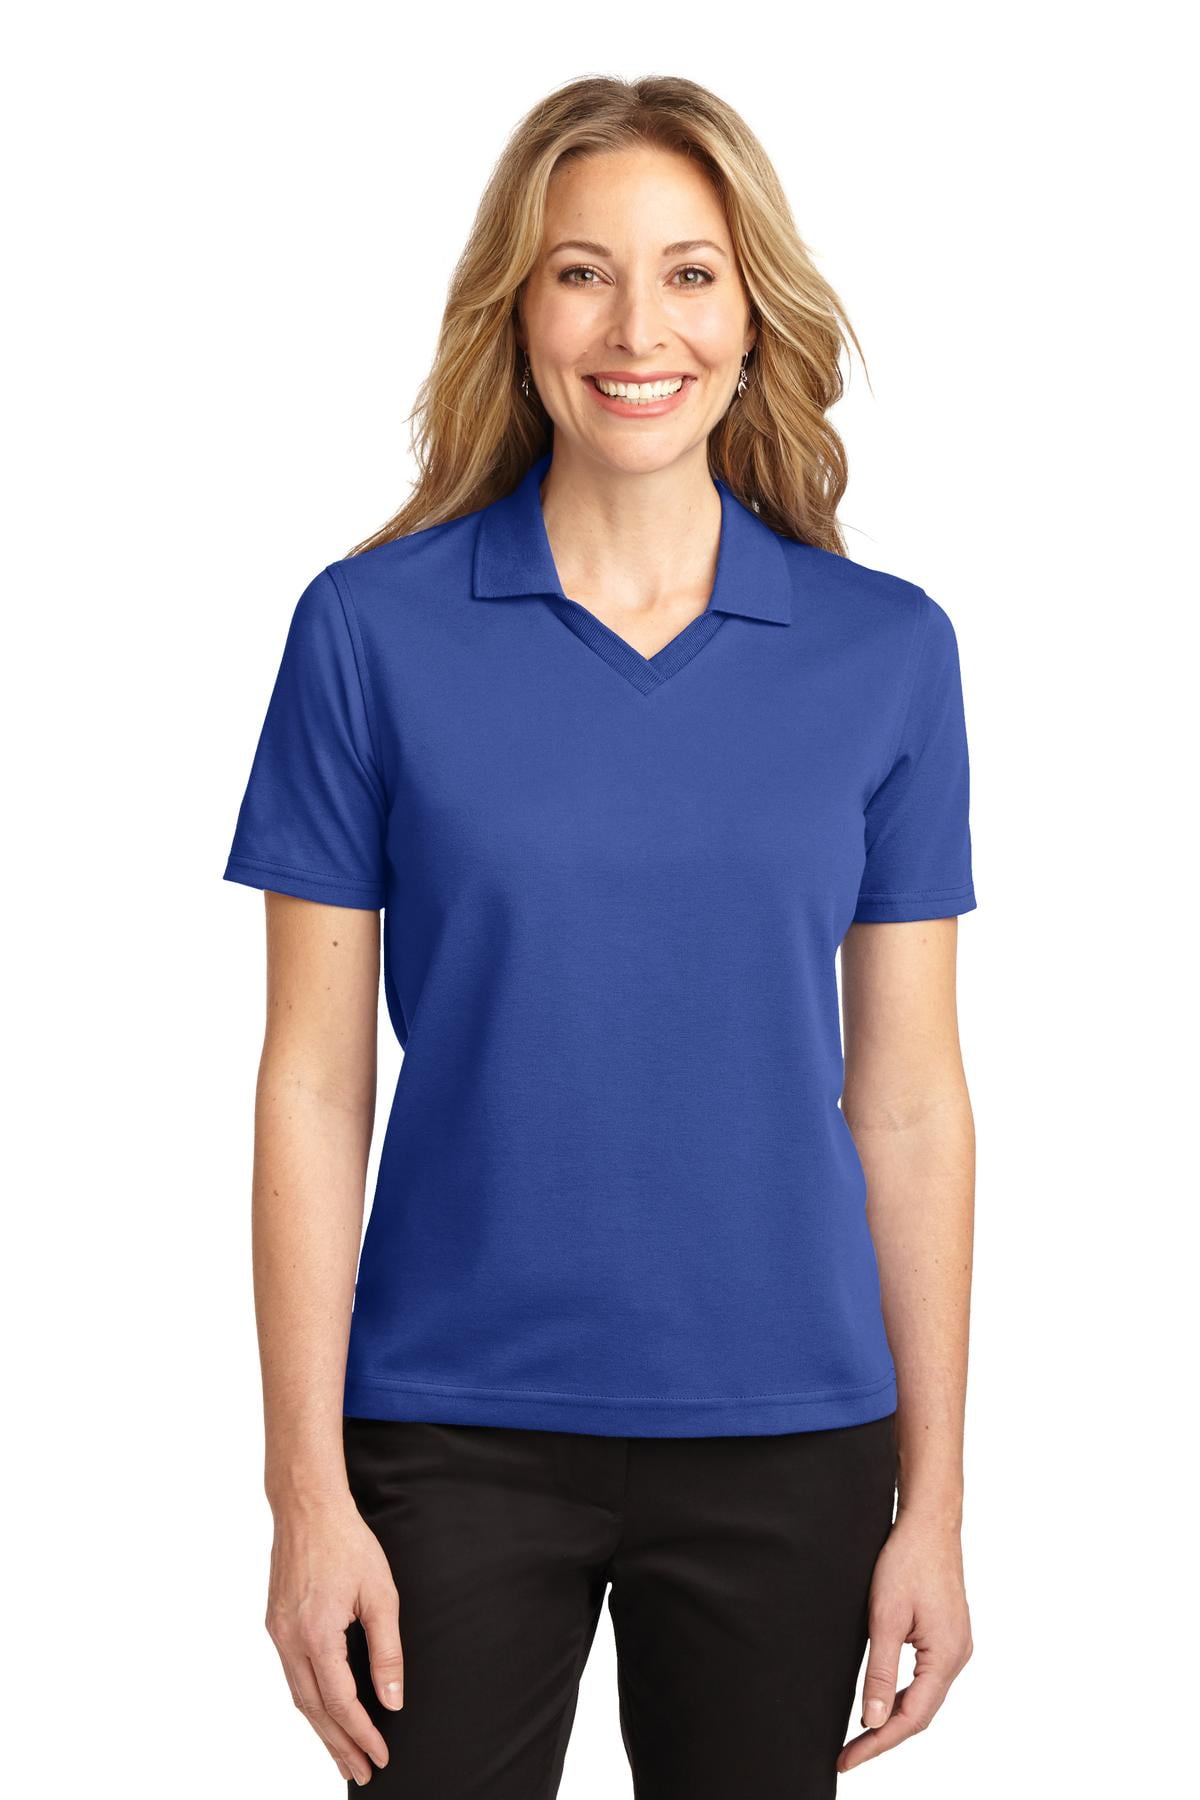 Port Authority Women's Rapid Dry V-Neck Collar Polo Shirt - L455 